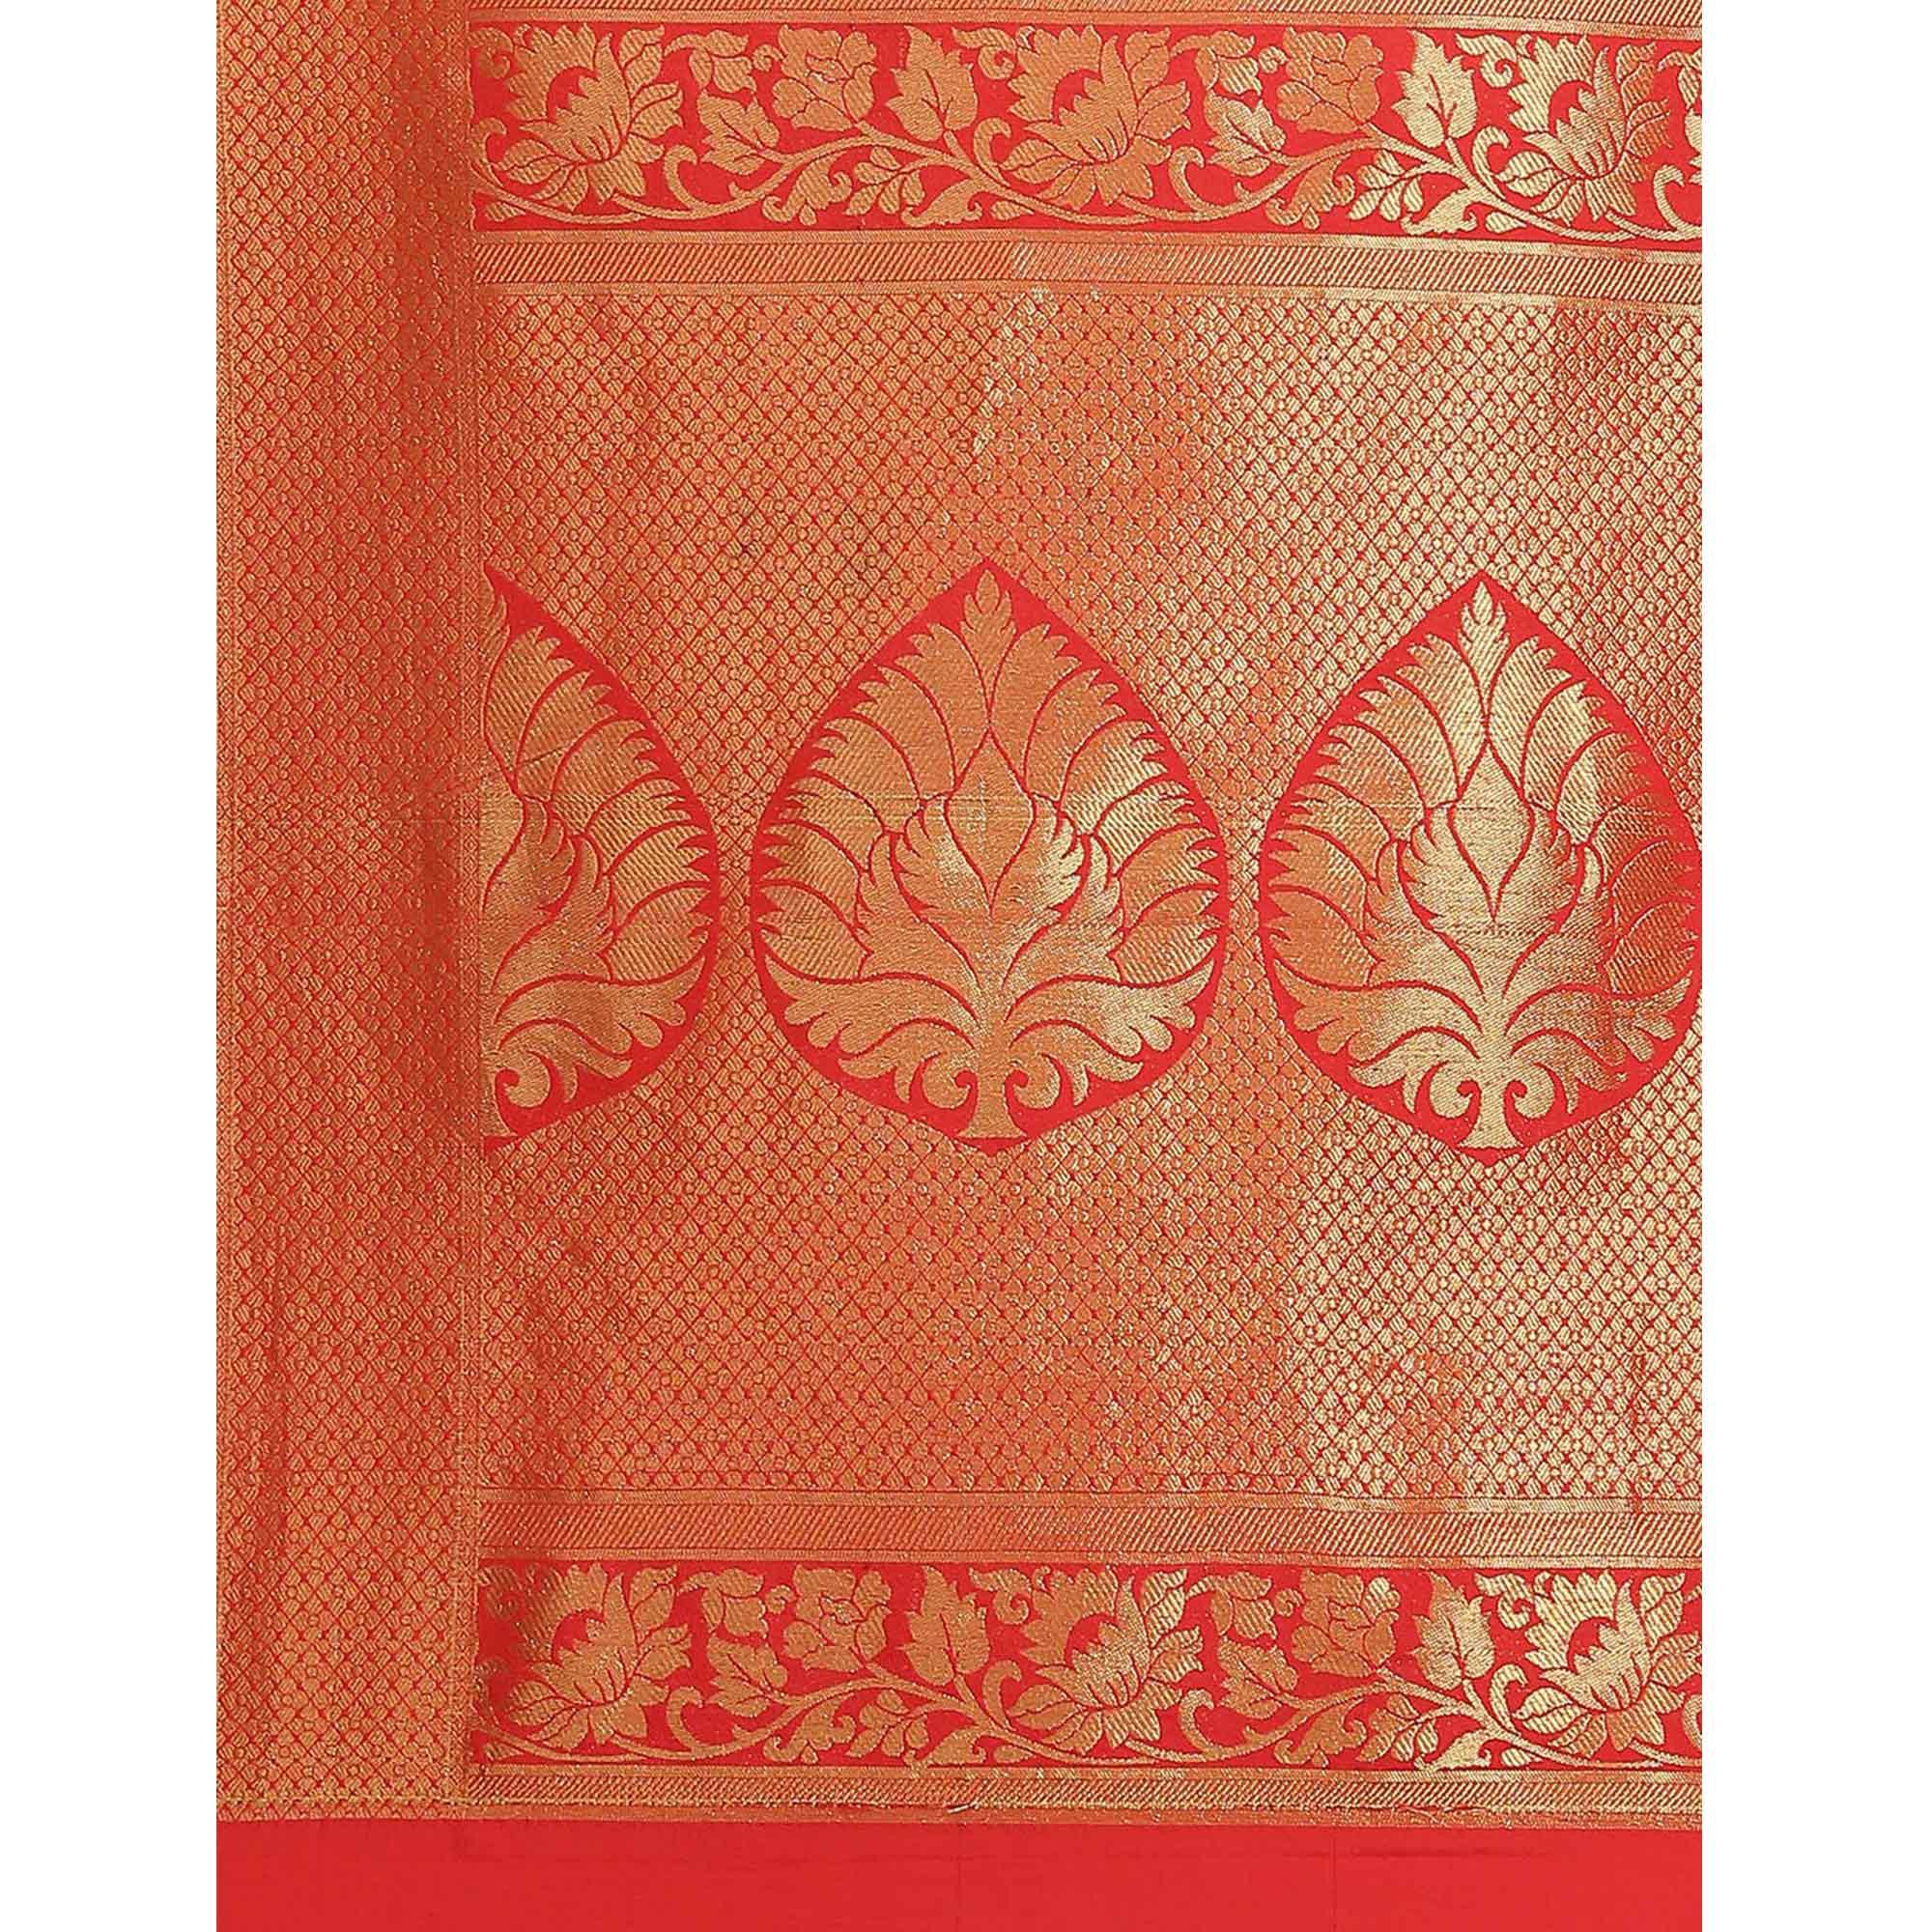 Women's Orange Festive Wear Woven Kanjivaram Silk Saree With Unstitched Blouse - Peachmode